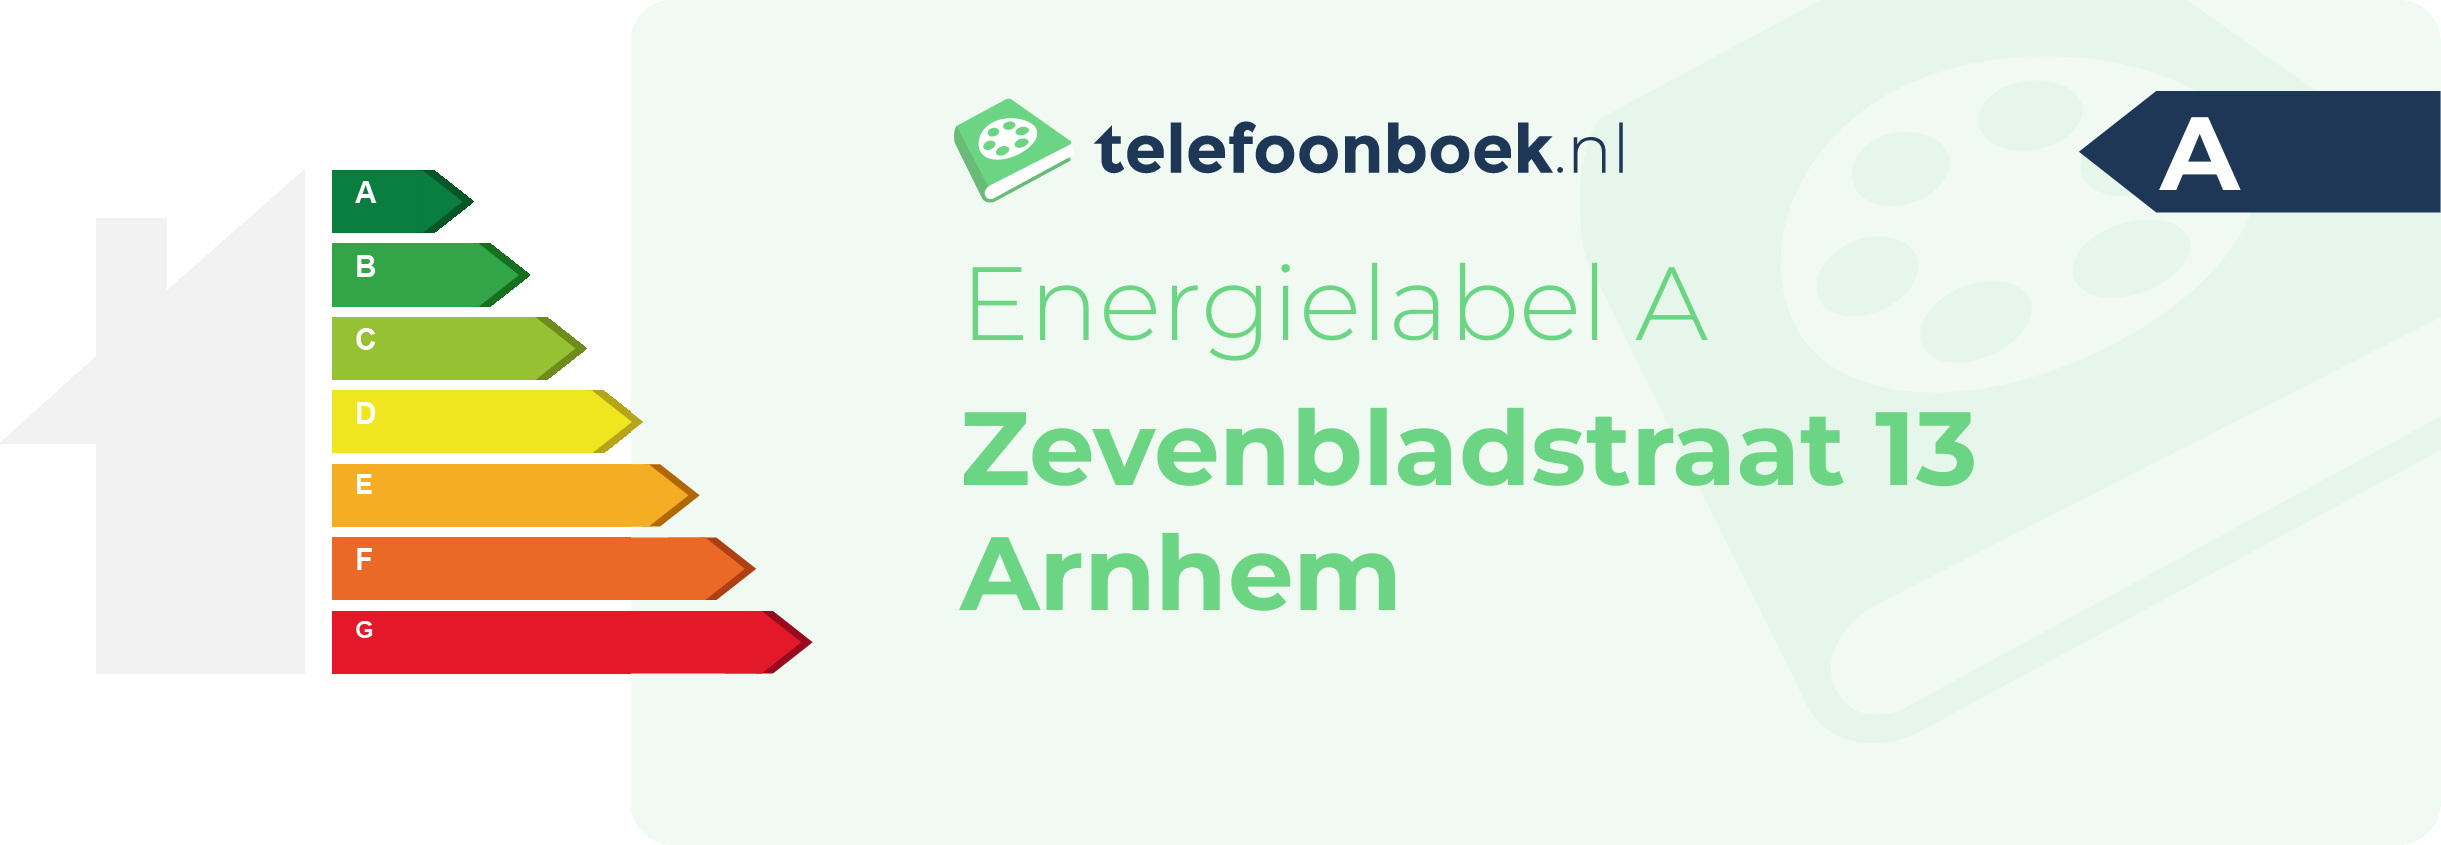 Energielabel Zevenbladstraat 13 Arnhem